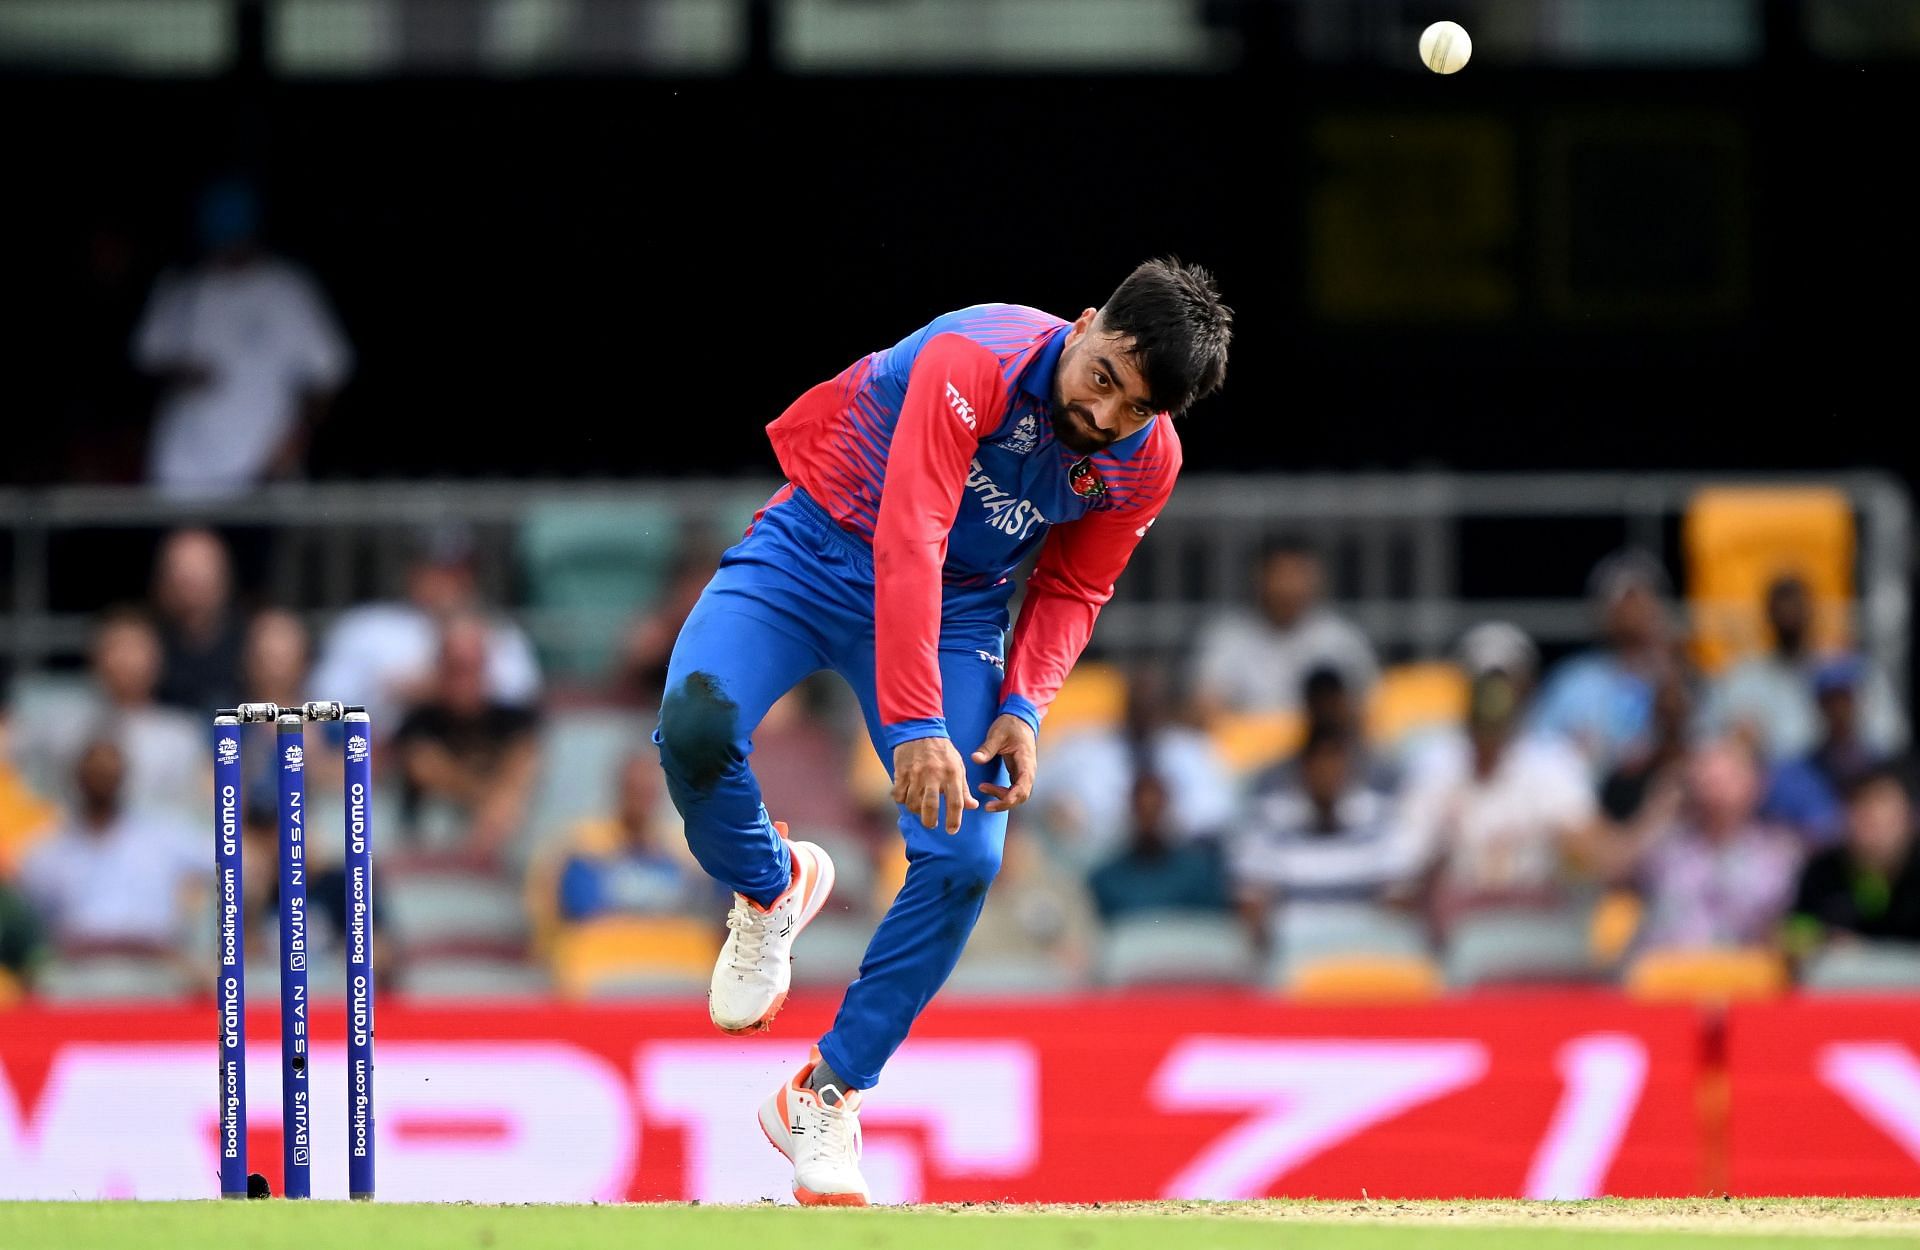 Rashid Khan has emerged as a leading spinner in T20 cricket